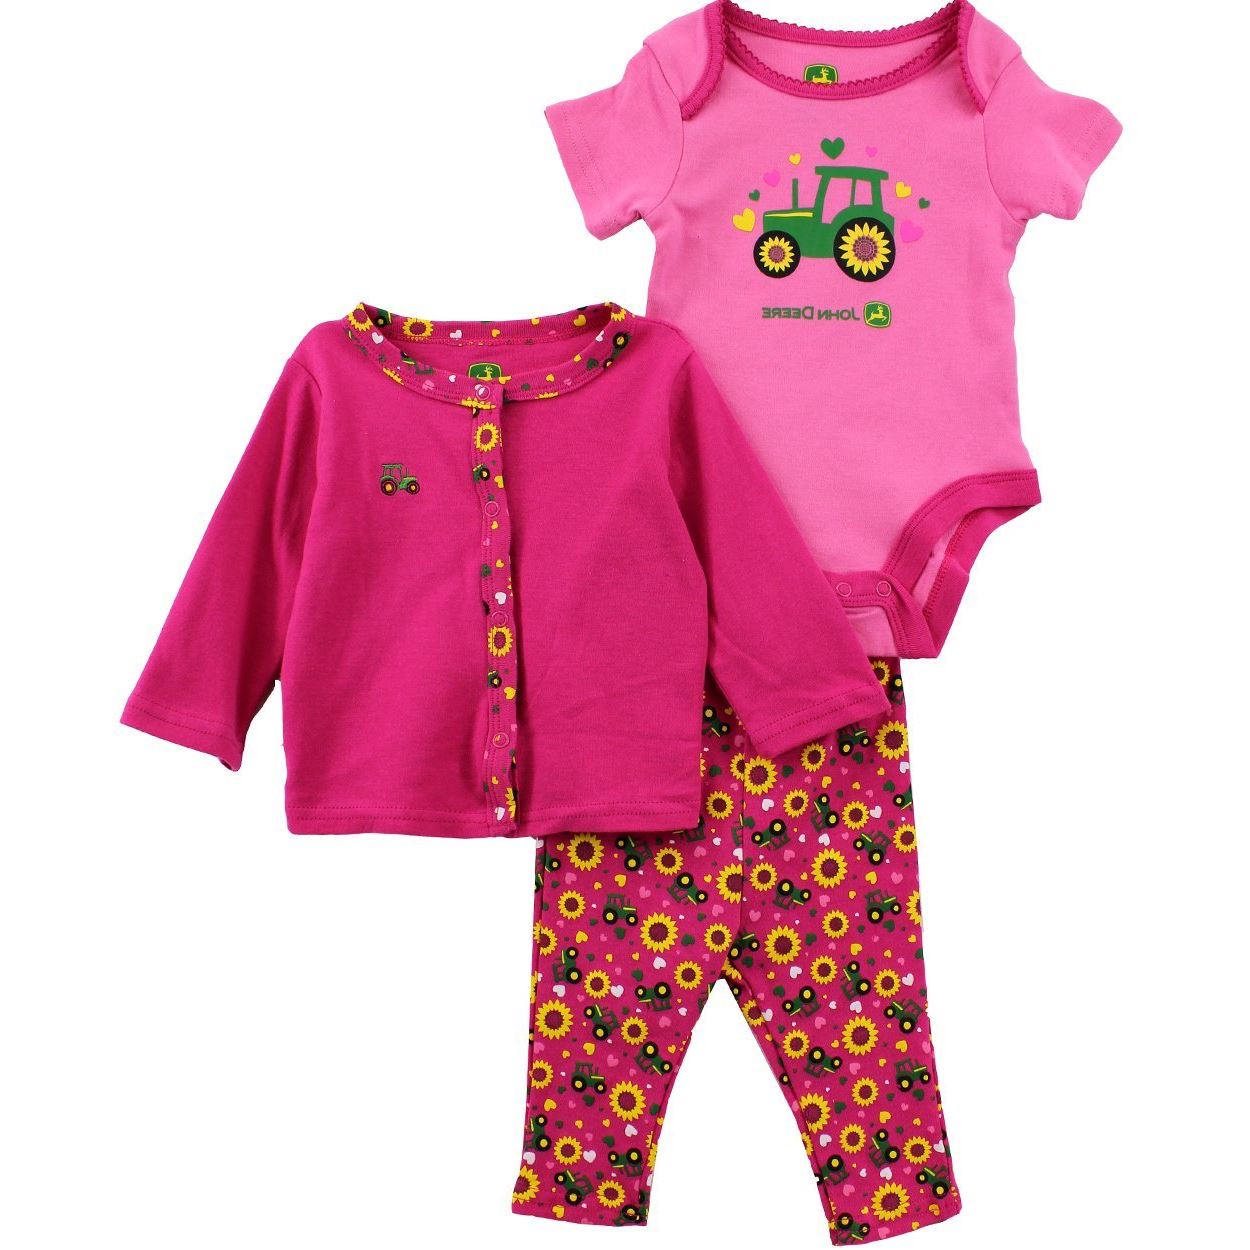 John Deere FN027P Pink 3 pc Layette Infant Set - ClothingShark.com